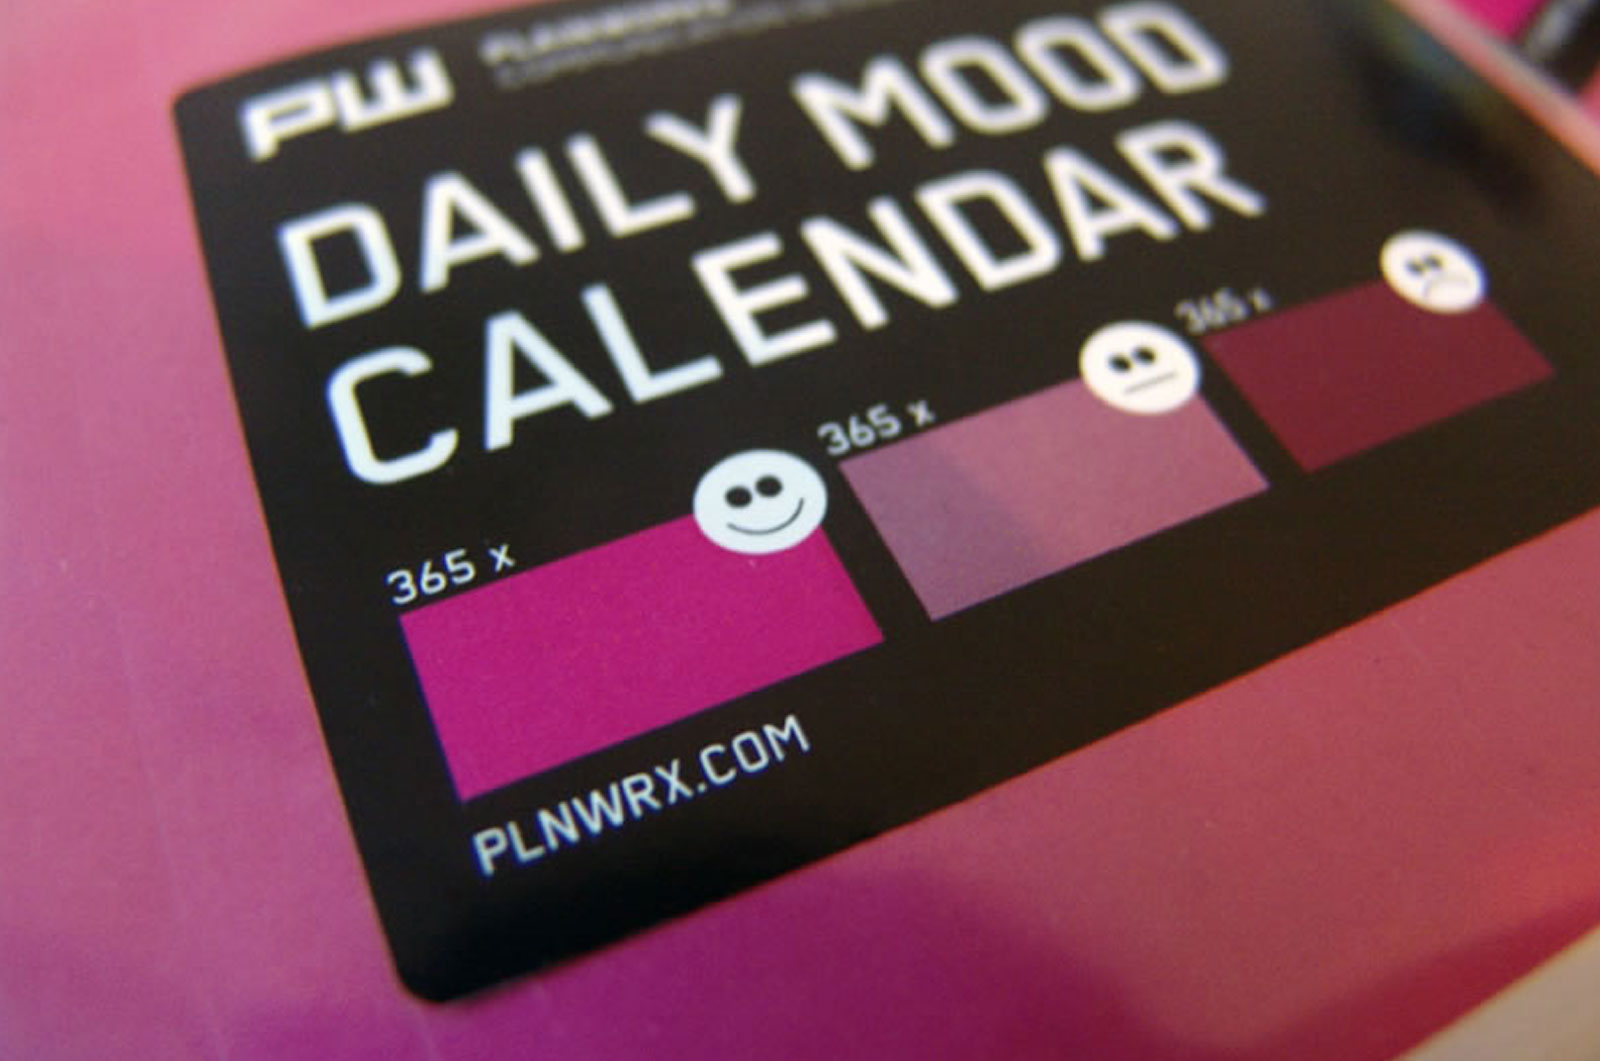 Alexander Glante - Works - Daily Mood Calendar 2011 - 09